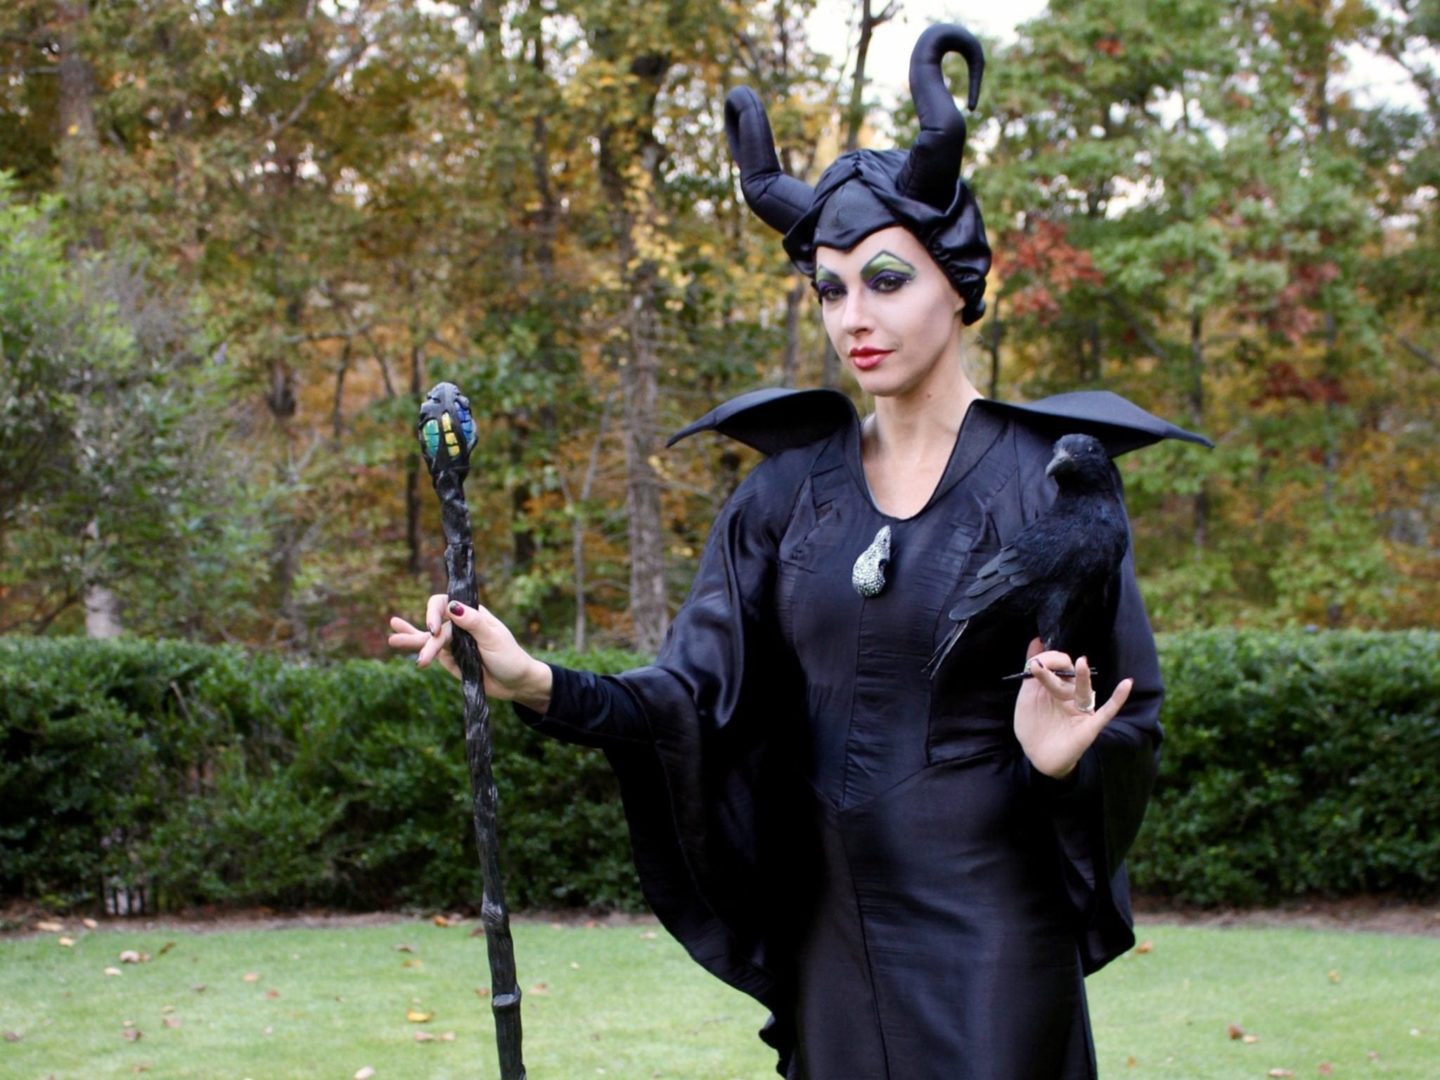 Diy Maleficent costume & Maleficent makeup tutorial | bluegraygal